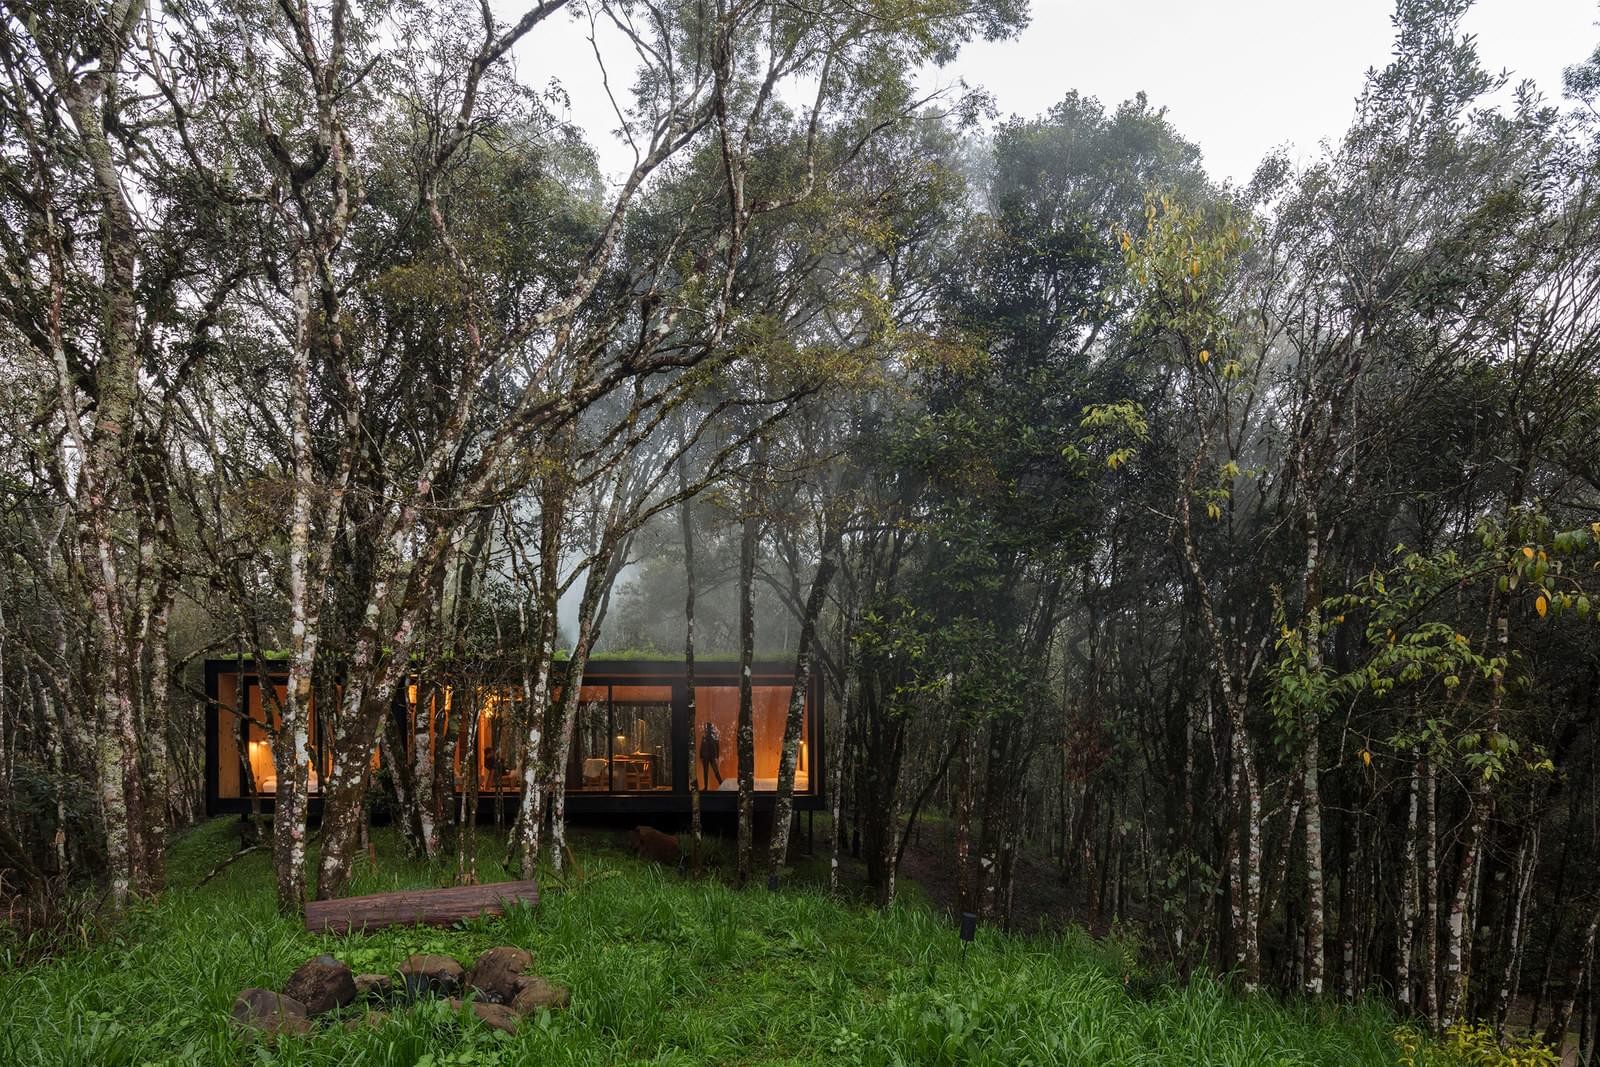  Modular house in a Brazilian forest